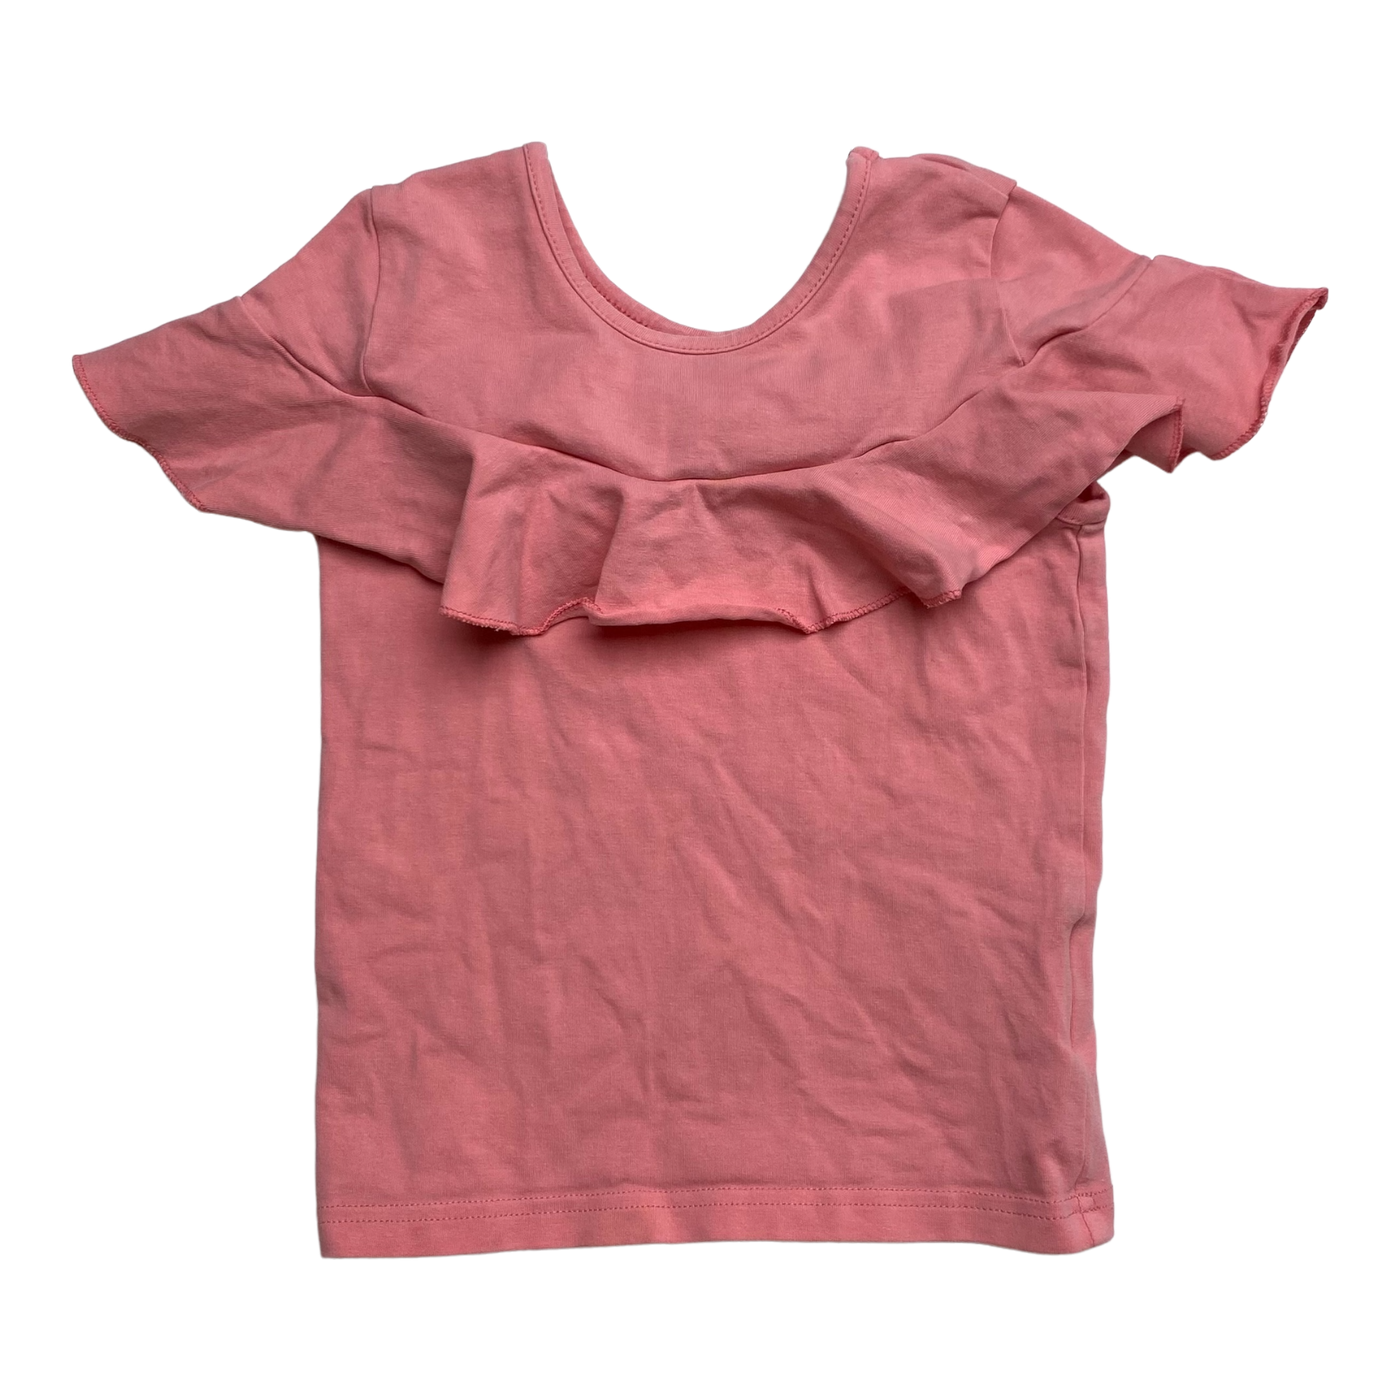 Gugguu frill top, pink | 86cm